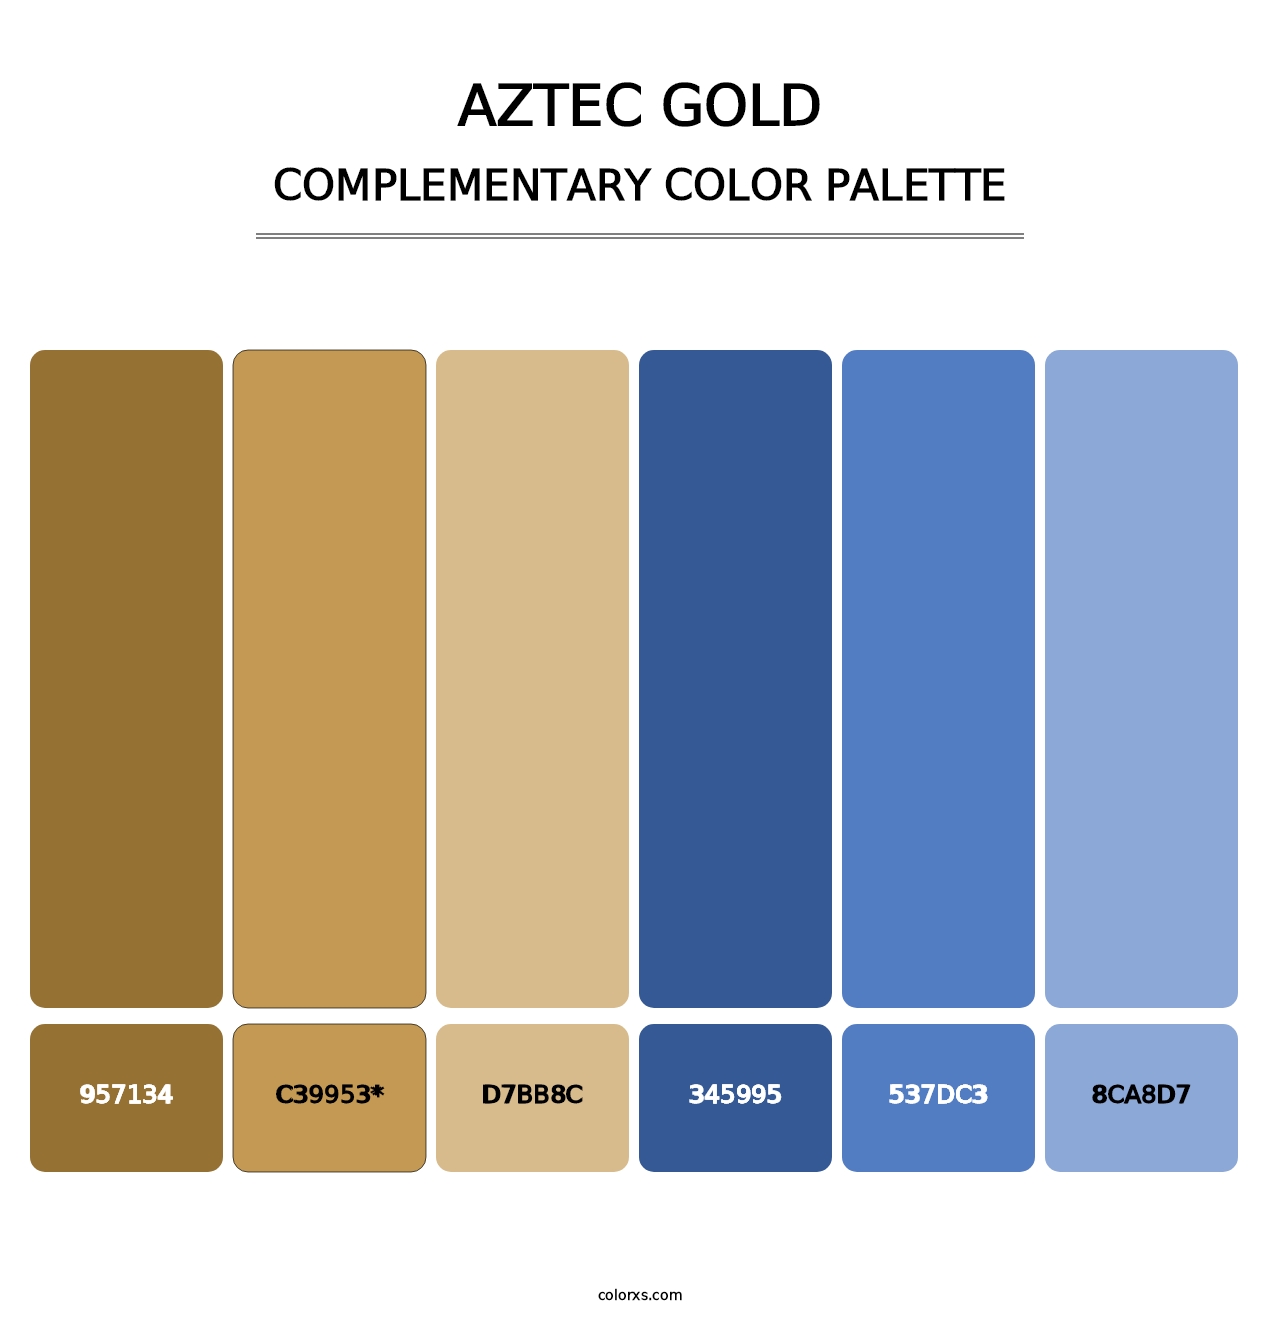 Aztec Gold - Complementary Color Palette